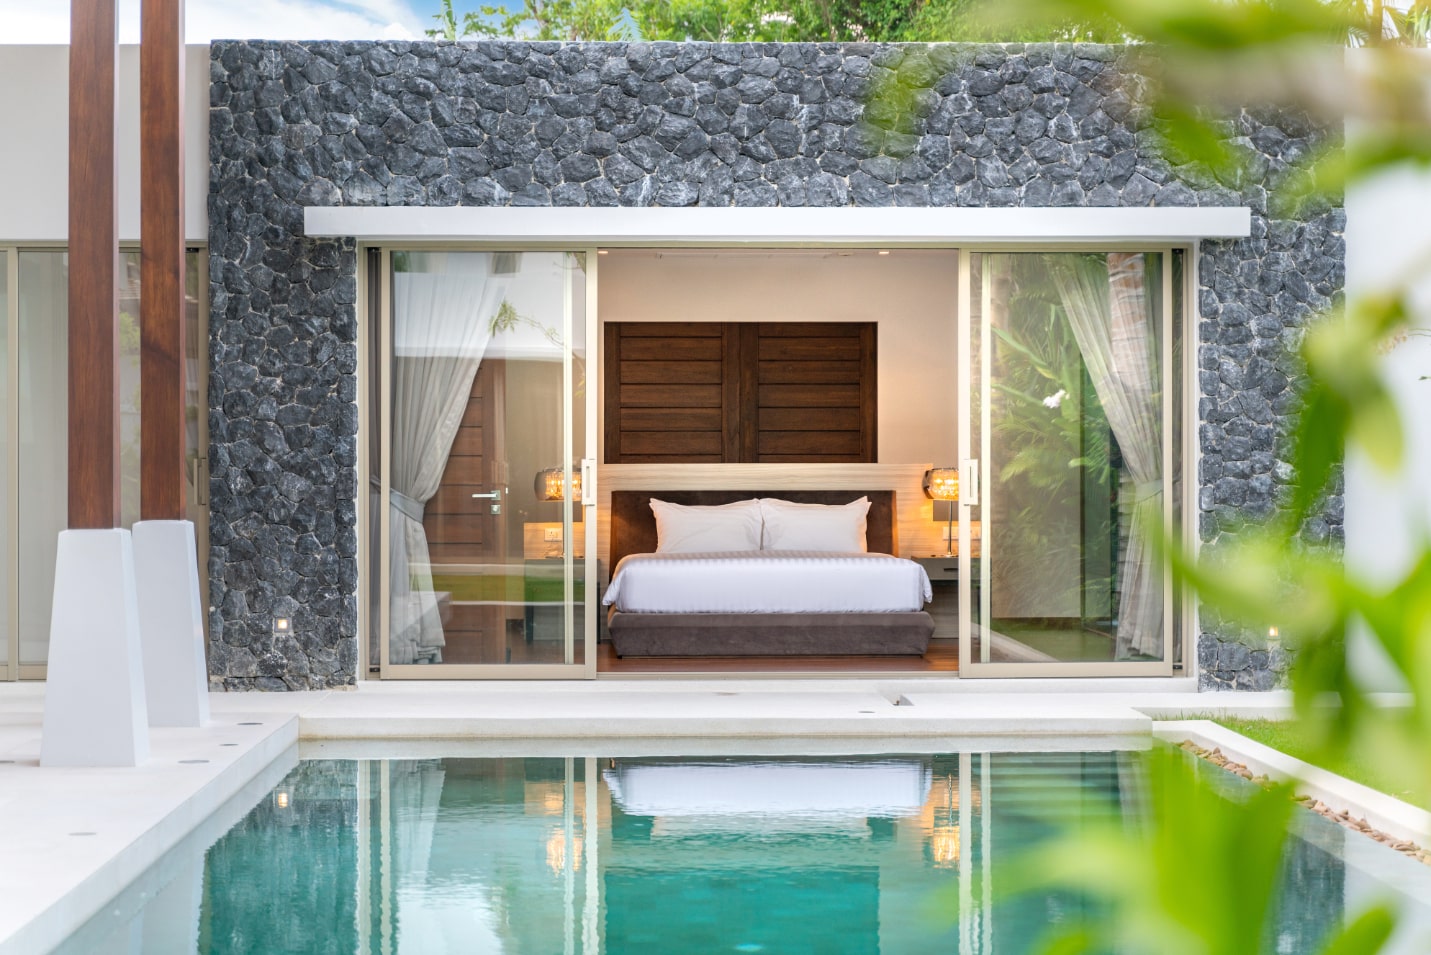 phuket-luxury-tropical-villas-sale-3-4-bed-4